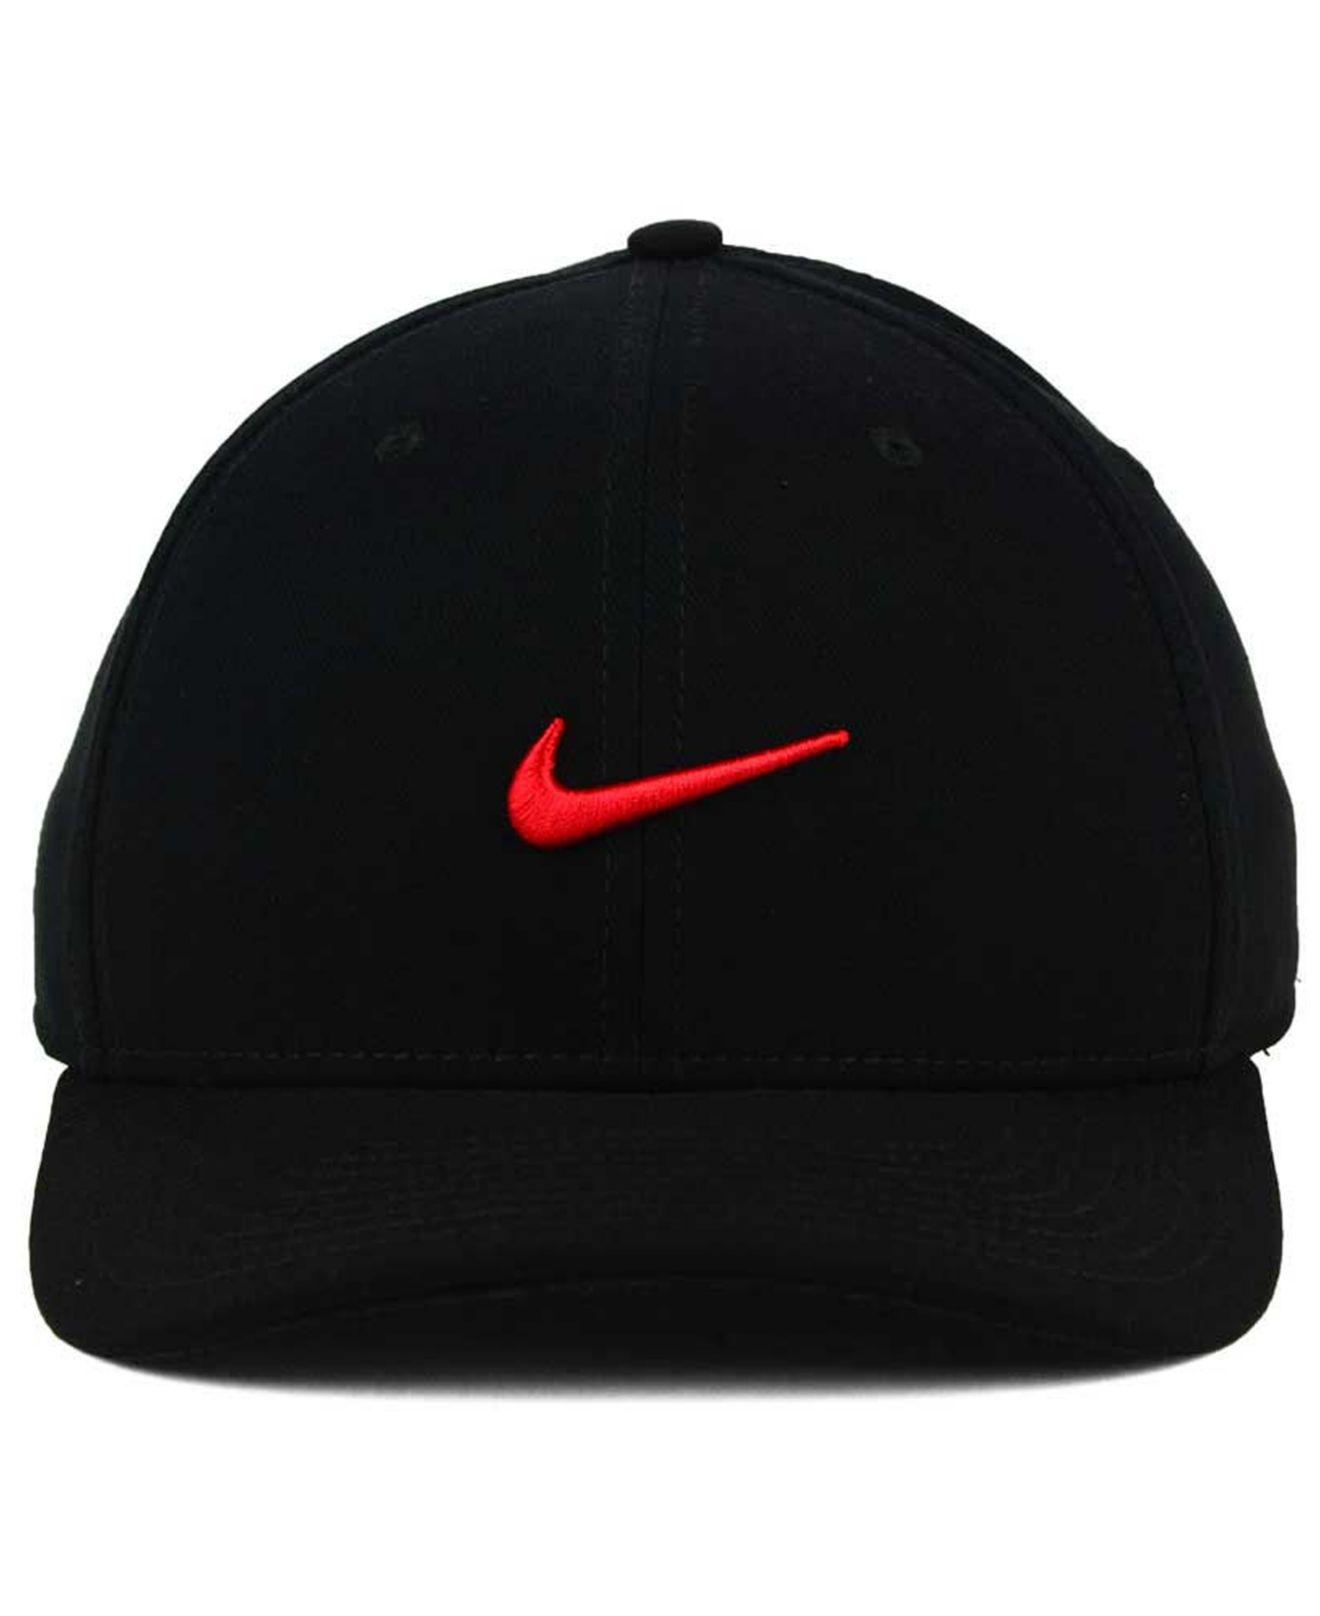 Nike Synthetic Classic Swoosh Flex Cap in Black/Red (Black) for Men - Lyst